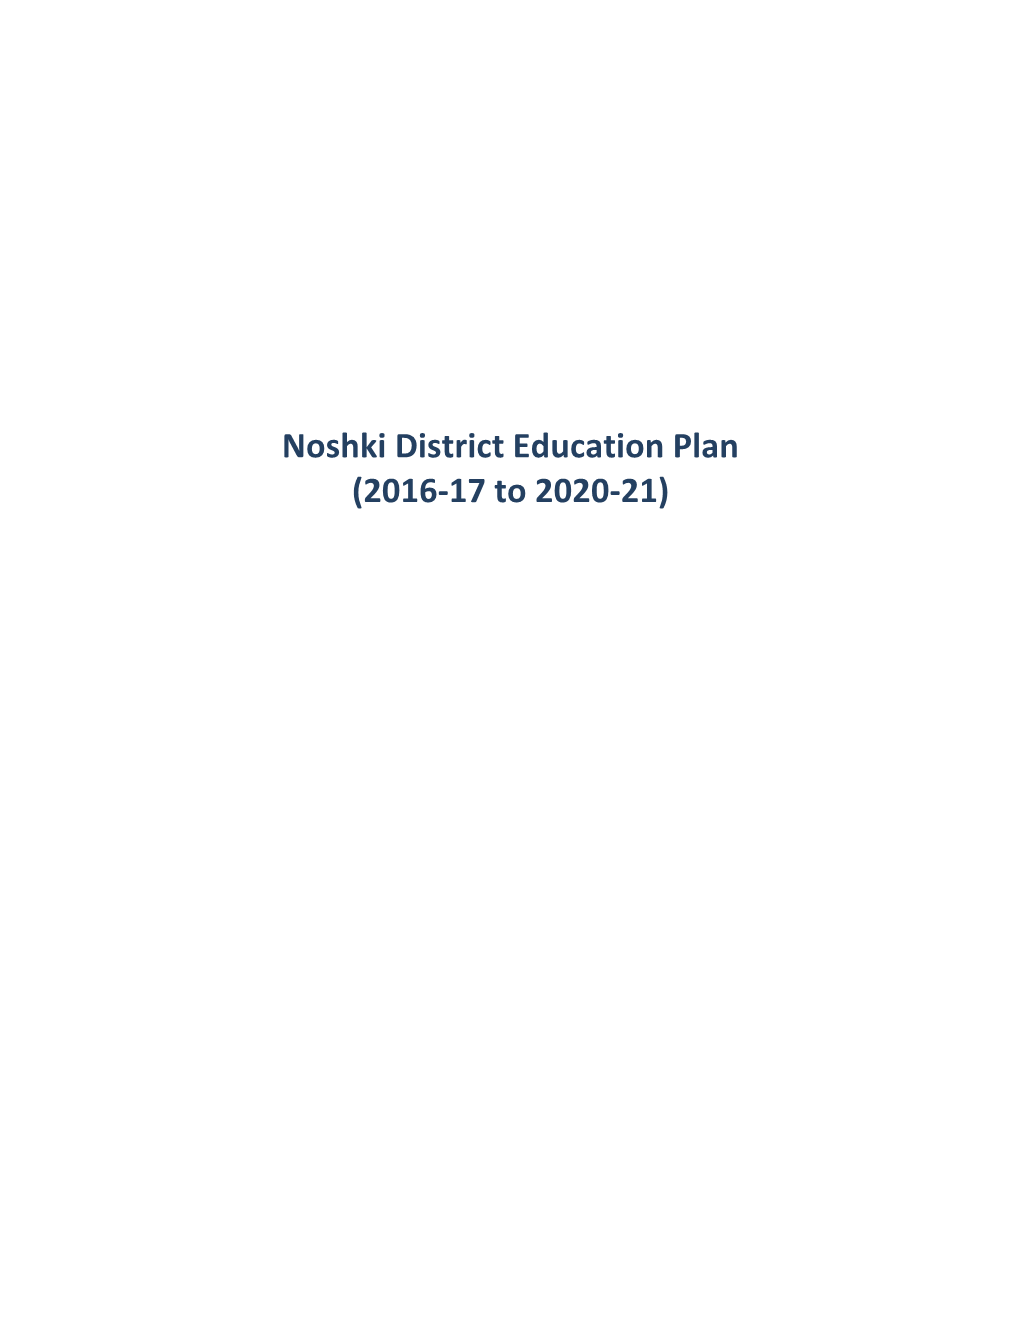 Noshki District Education Plan (2016-17 to 2020-21)